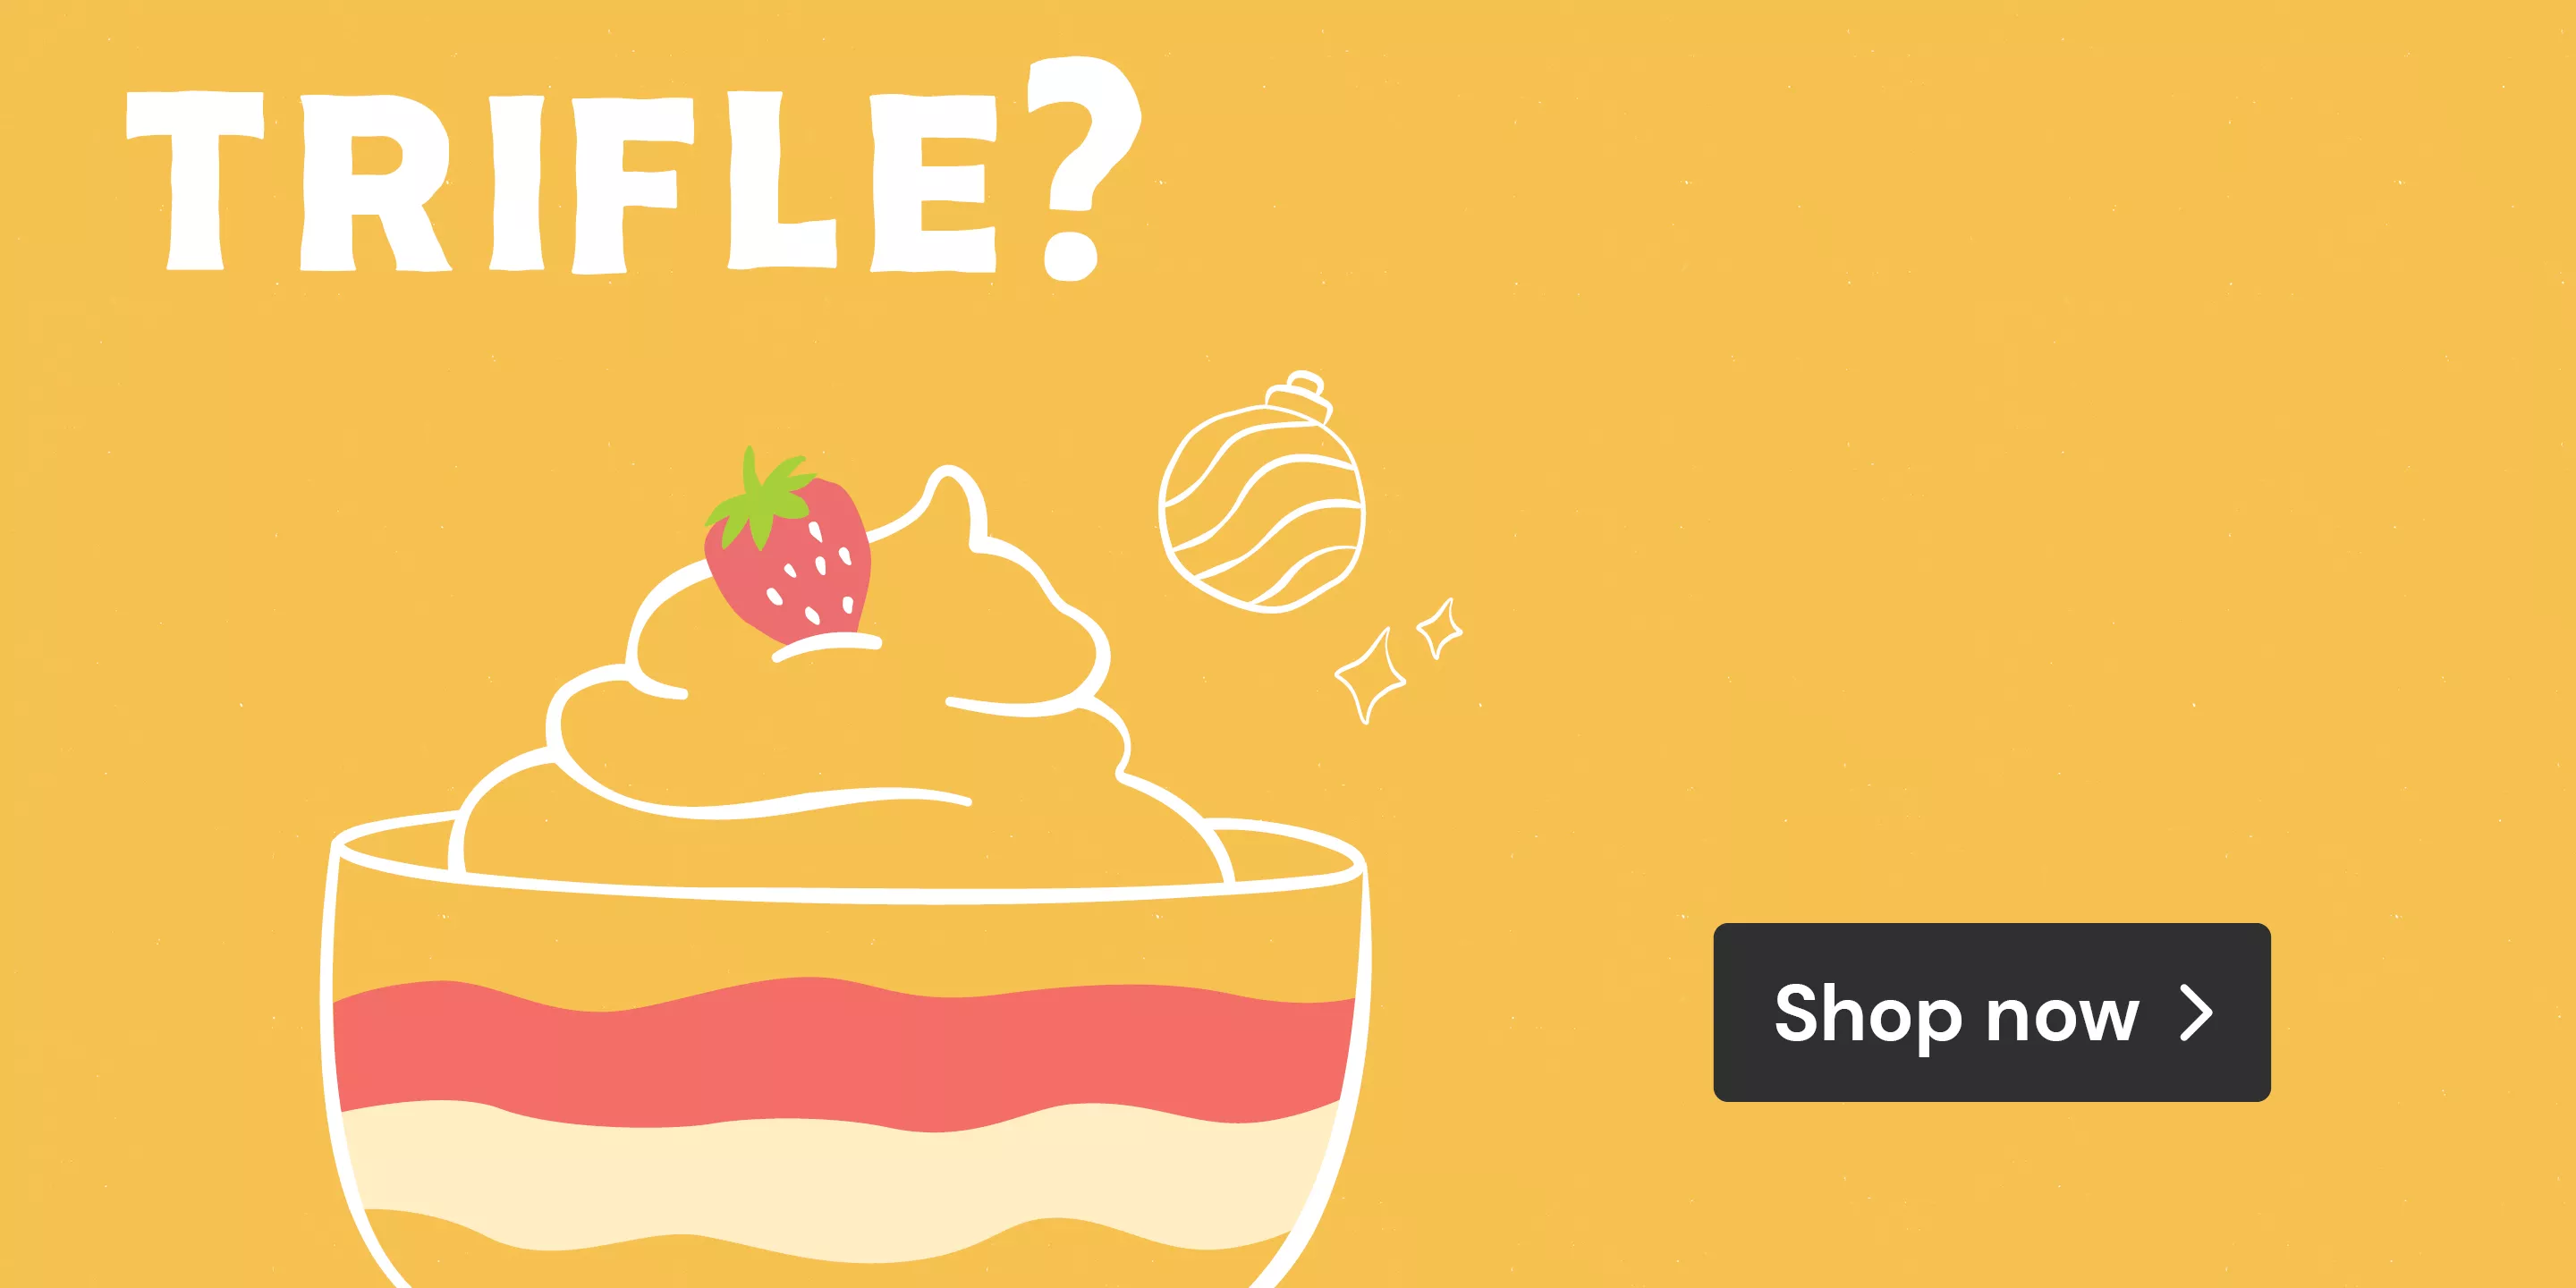 Trifle? Shop now